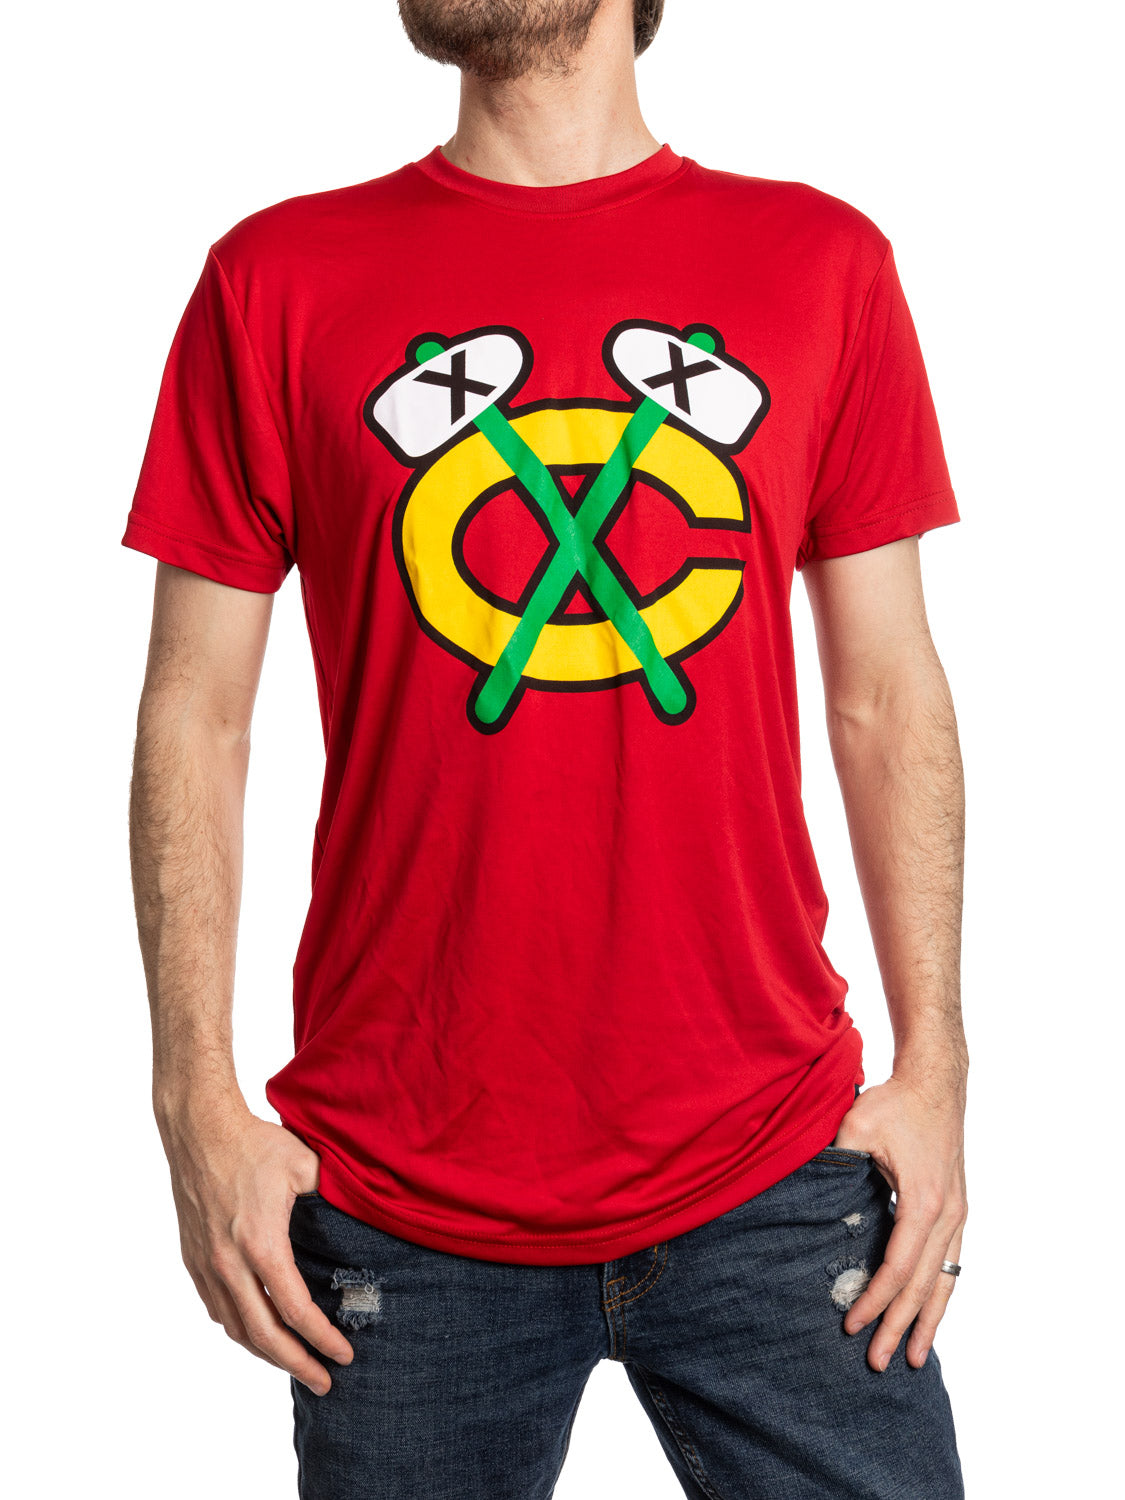 Chicago Blackhawks Short Sleeve Rashguard T Shirt - Alternate Logo